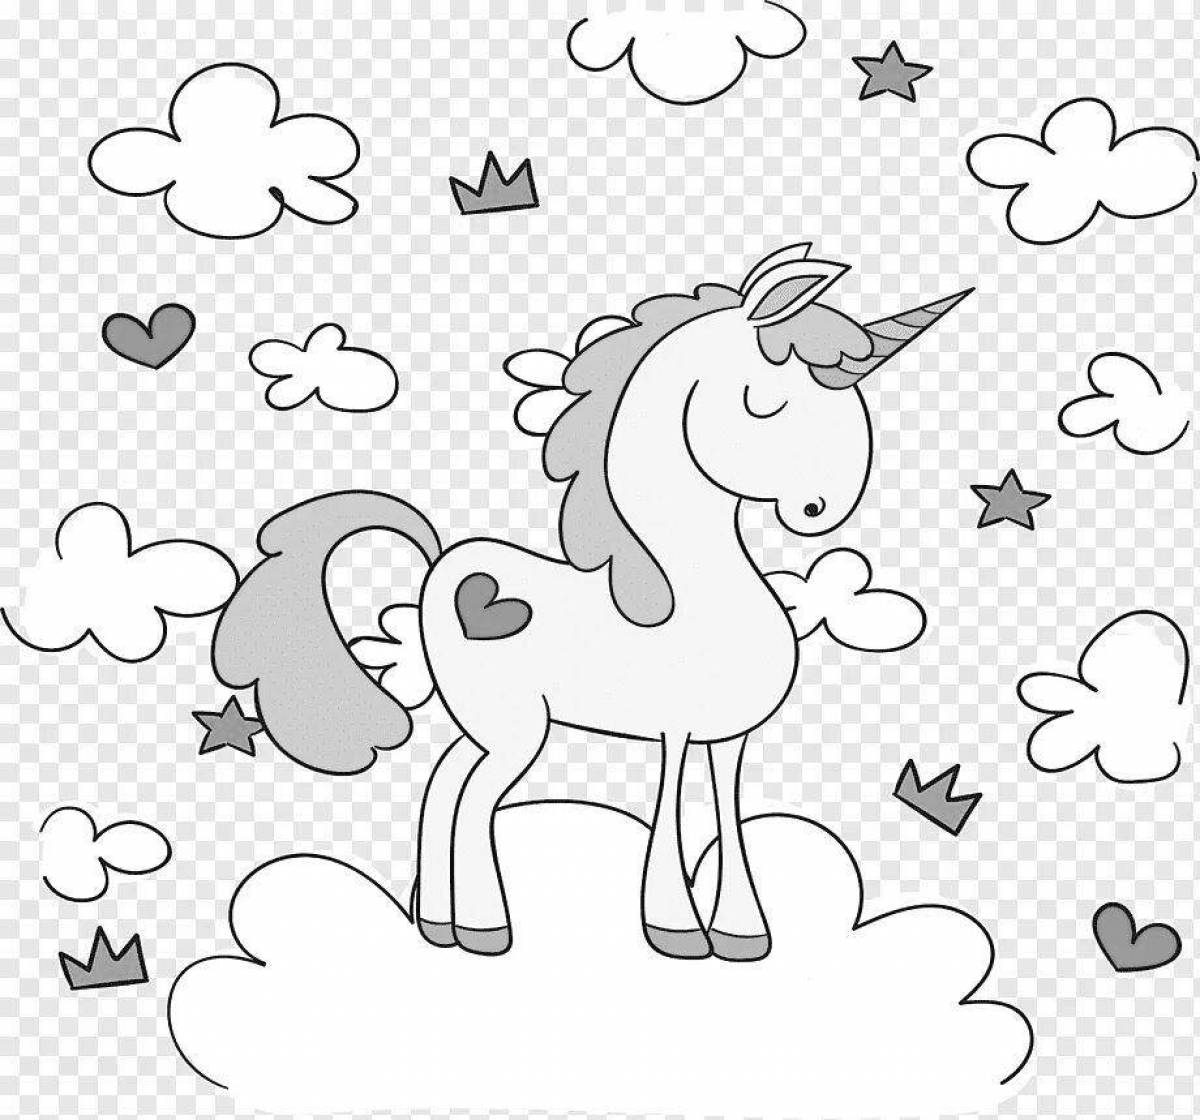 Unicorn cloud glitter coloring book